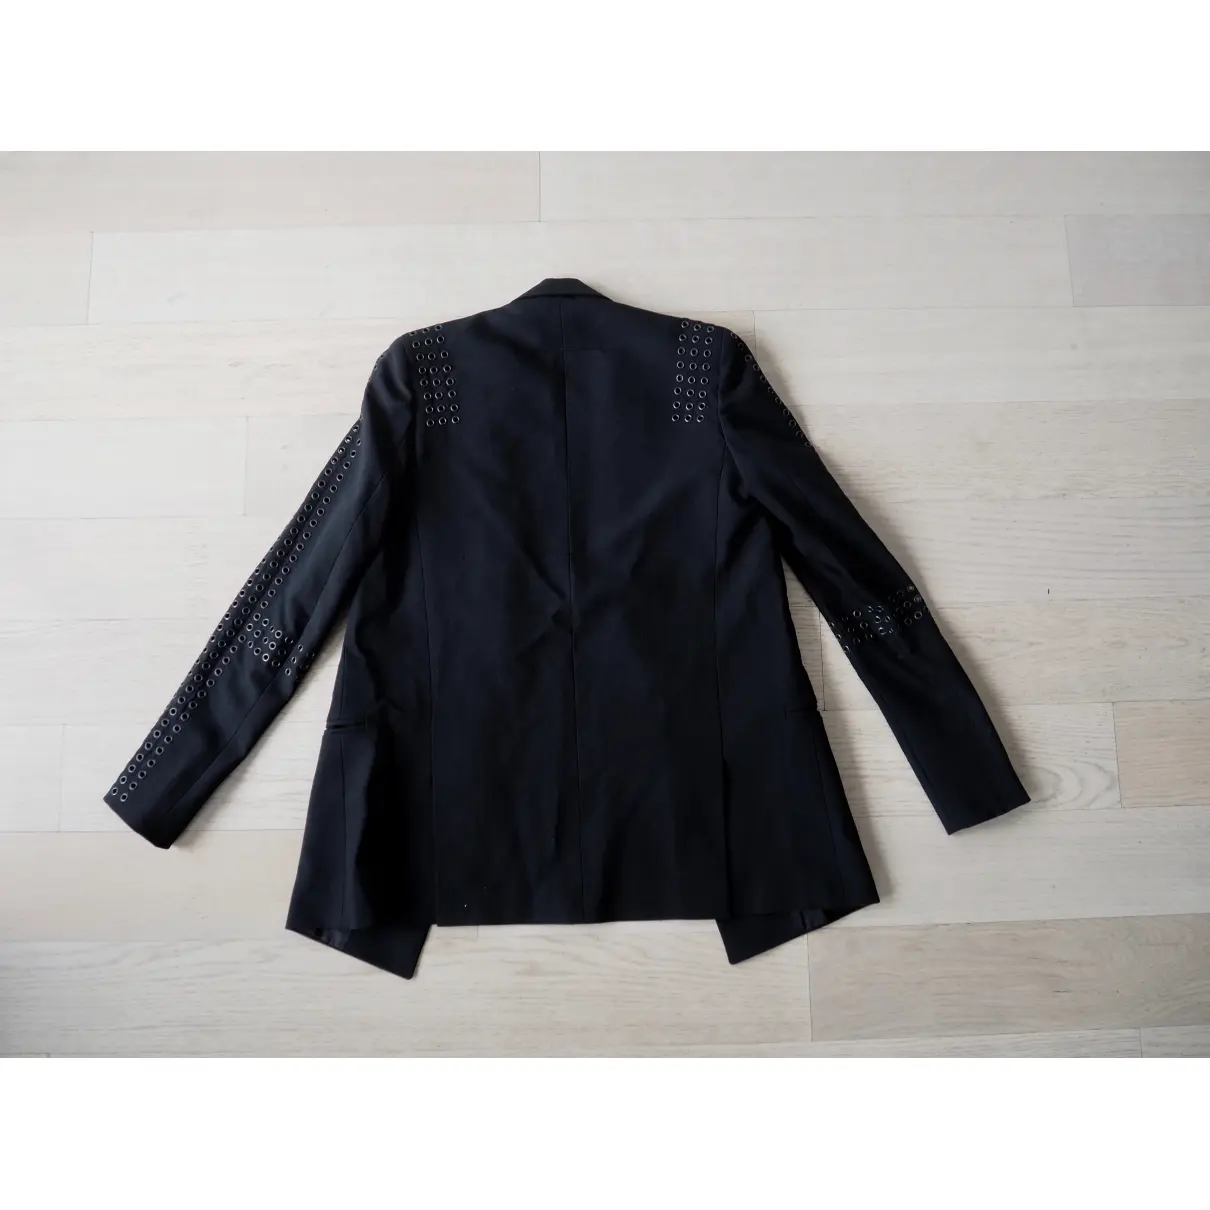 Buy Givenchy Black Polyester Jacket online